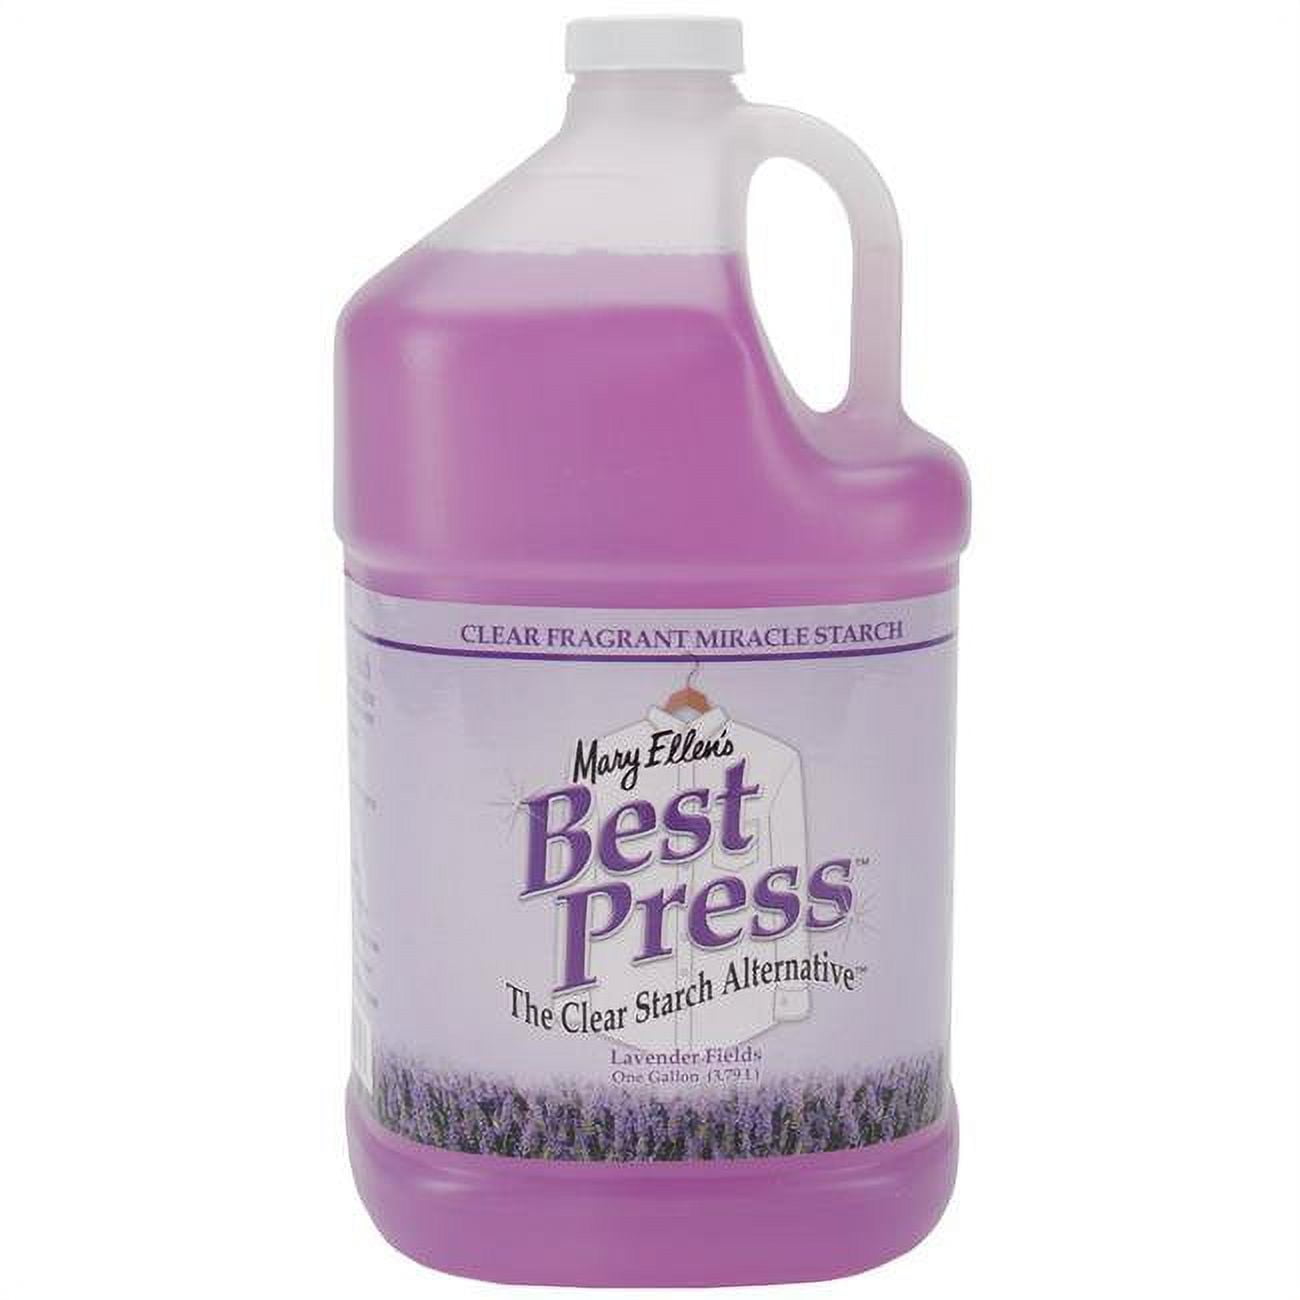 Best Press Spray Starch Lavender Fields 16oz - 035234600313